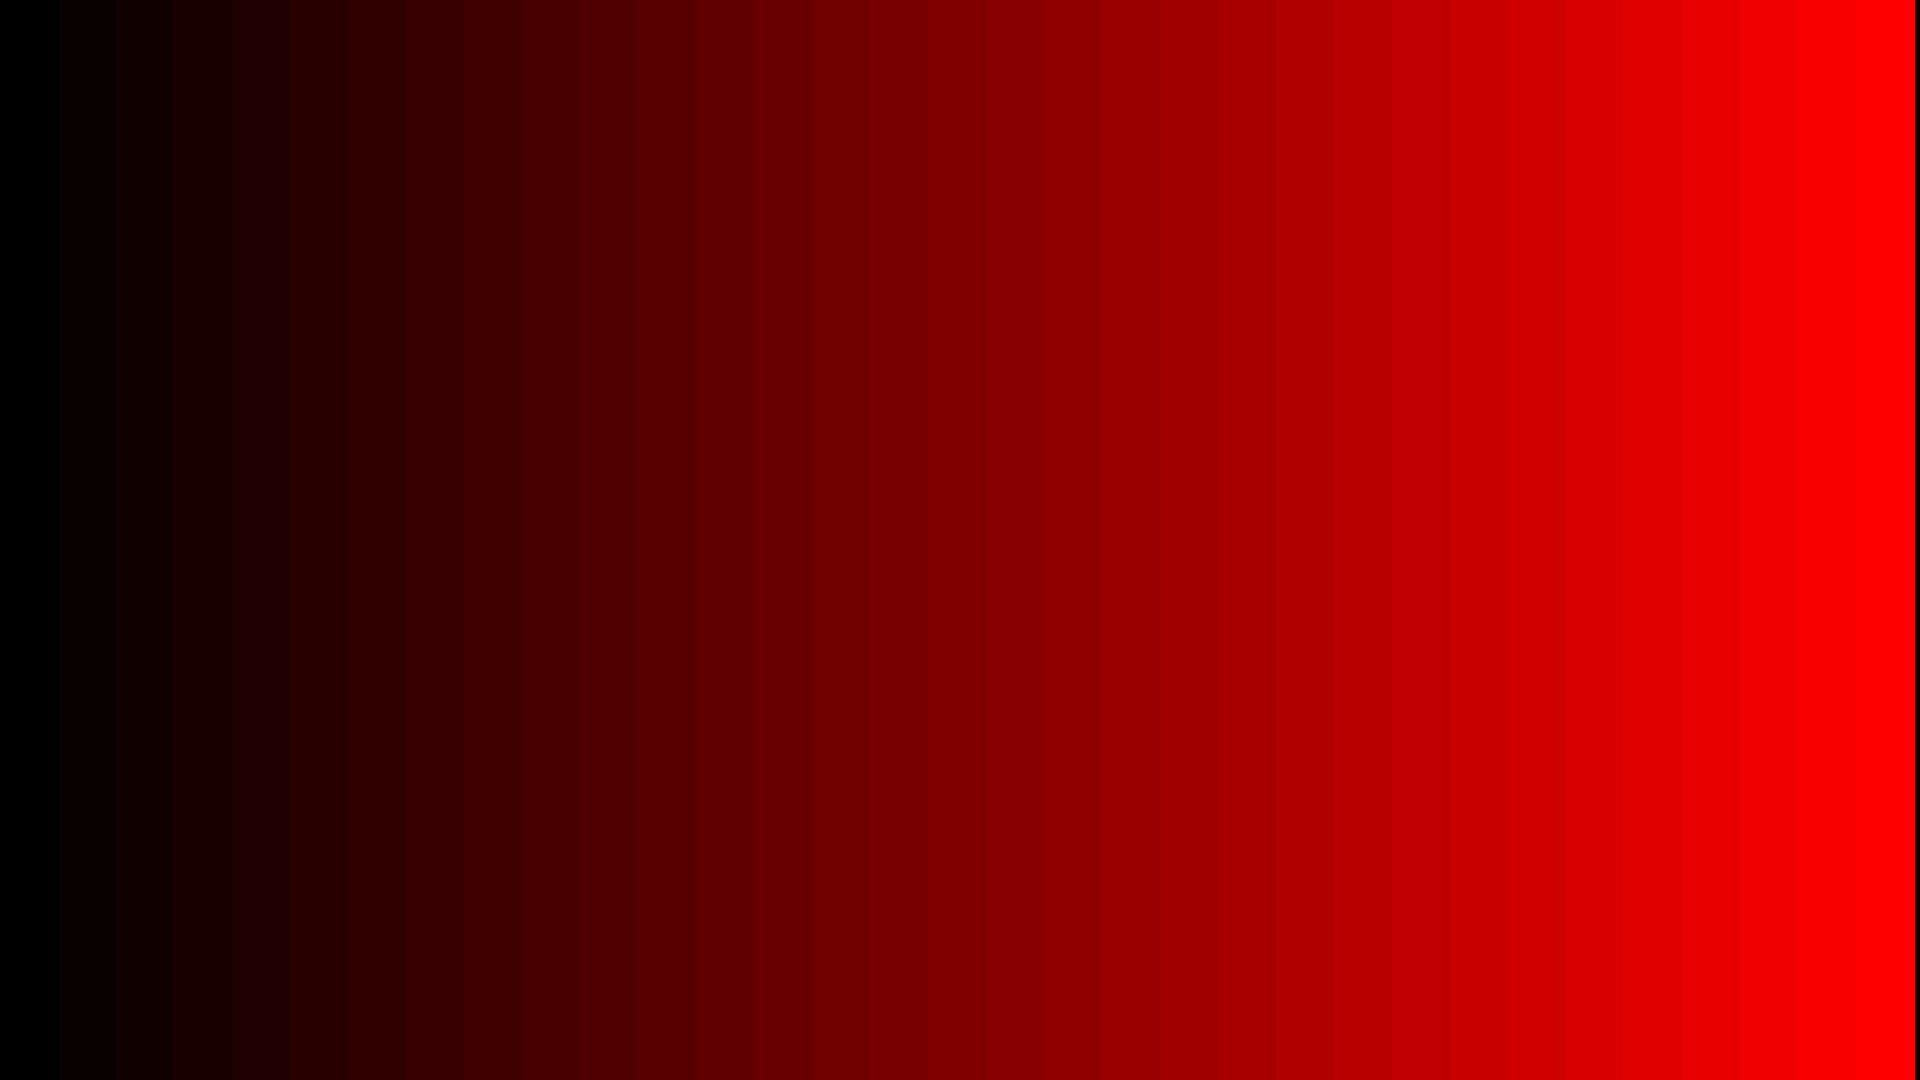 red gradient background